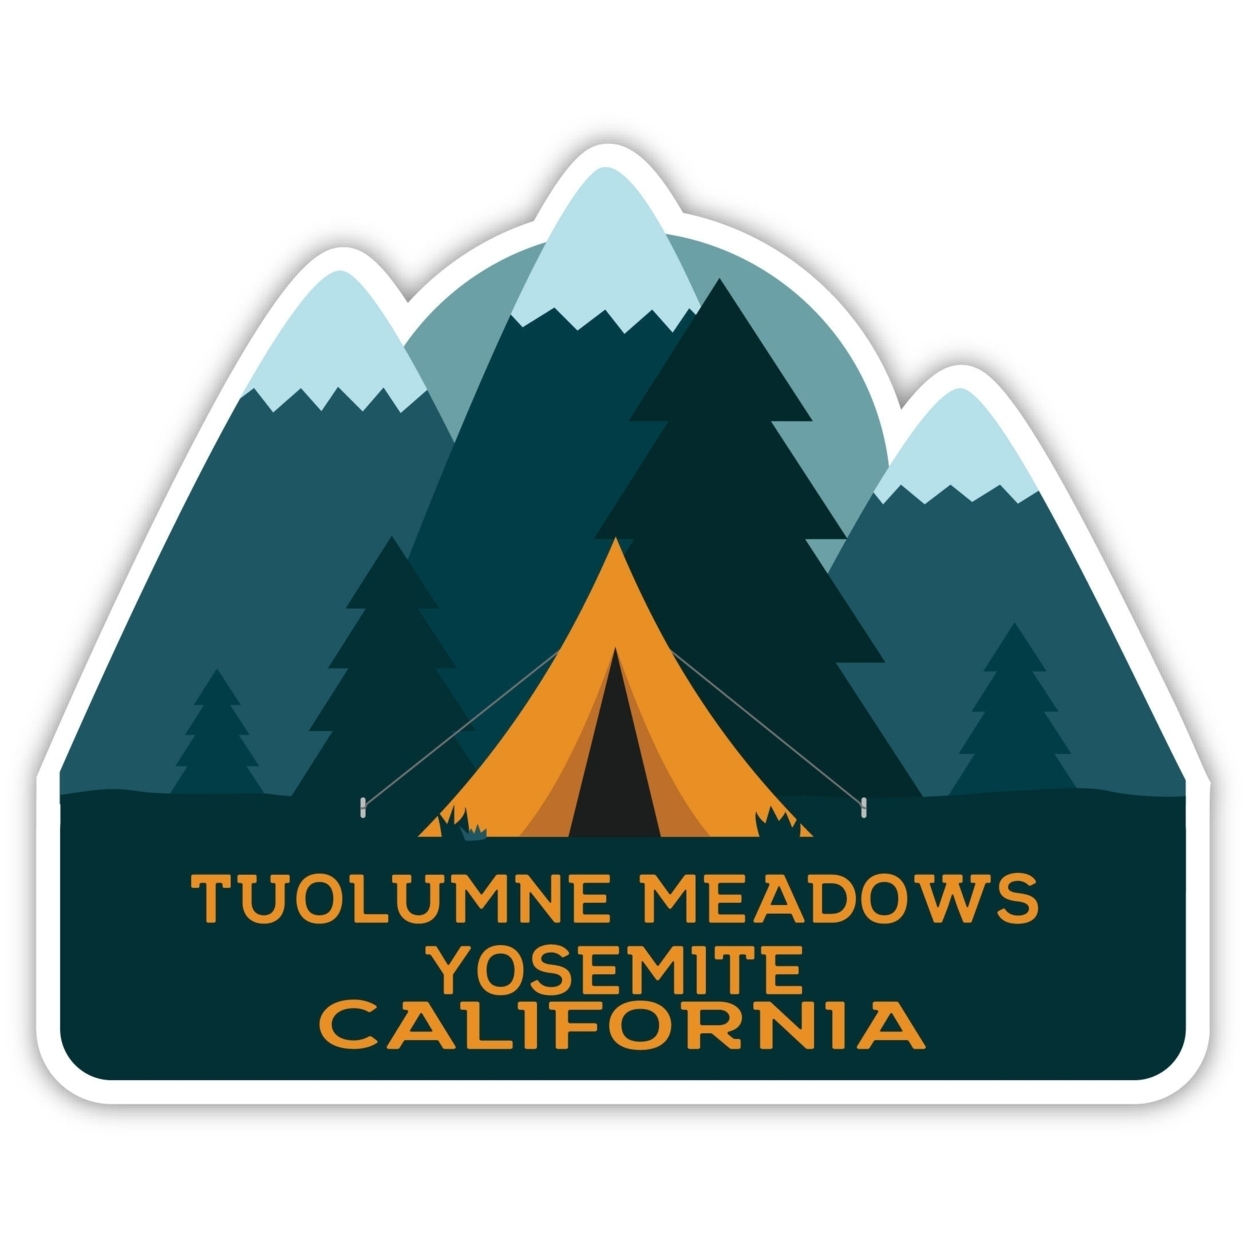 Tuolumne Meadows Yosemite California Souvenir Decorative Stickers (Choose Theme And Size) - Single Unit, 2-Inch, Adventures Awaits